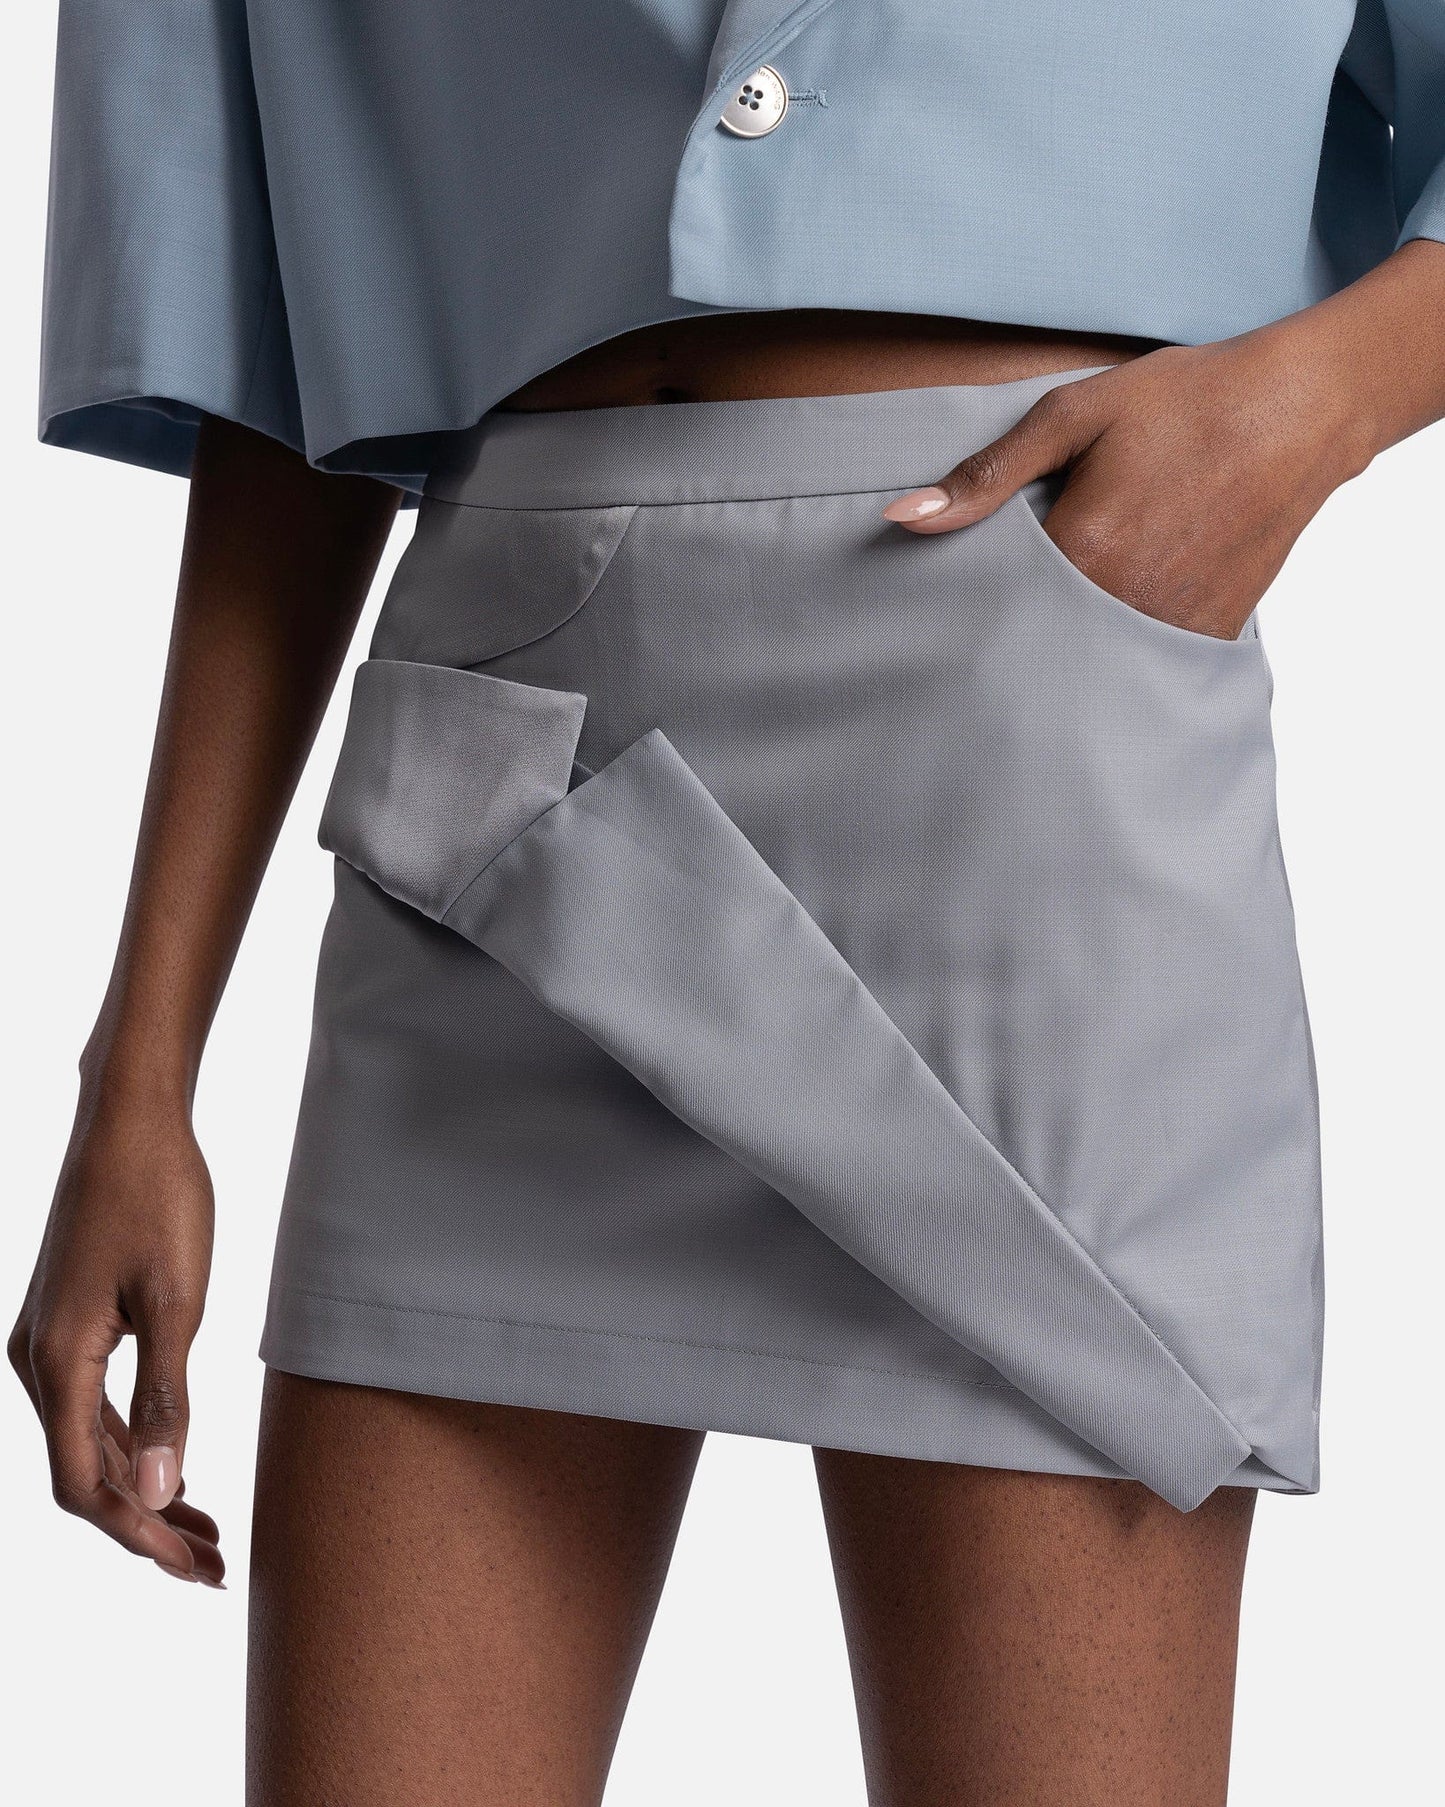 Feng Chen Wang Women Skirts Low-Waisted Mini Skirt in Grey